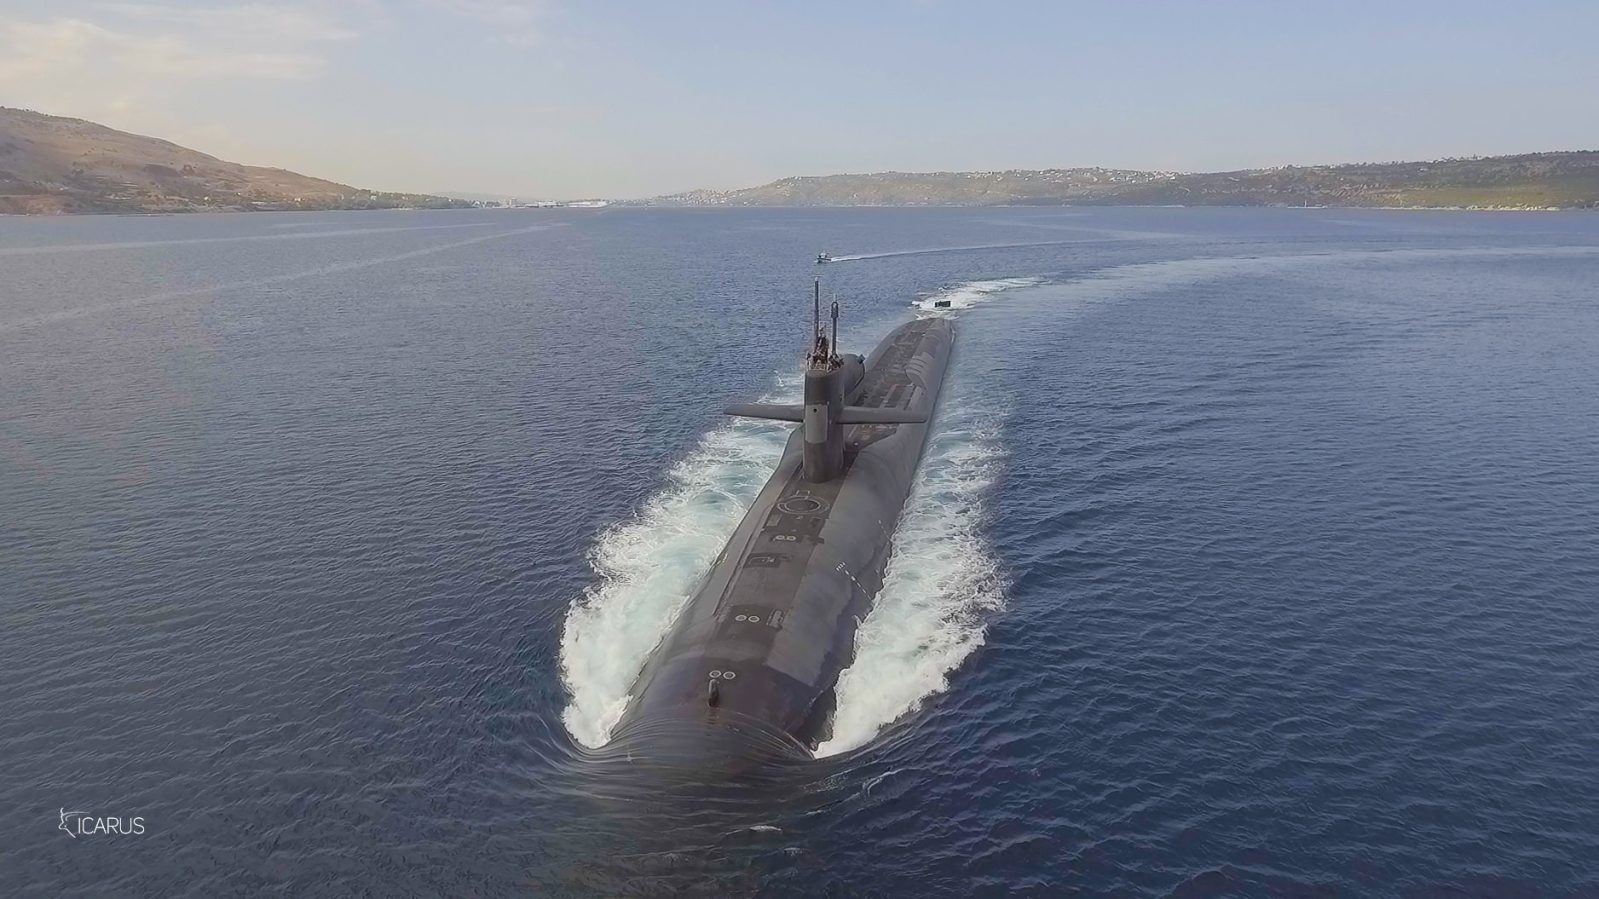 DJI Phantom 4 captures amazing footage of nuclear powered submarine USS Florida